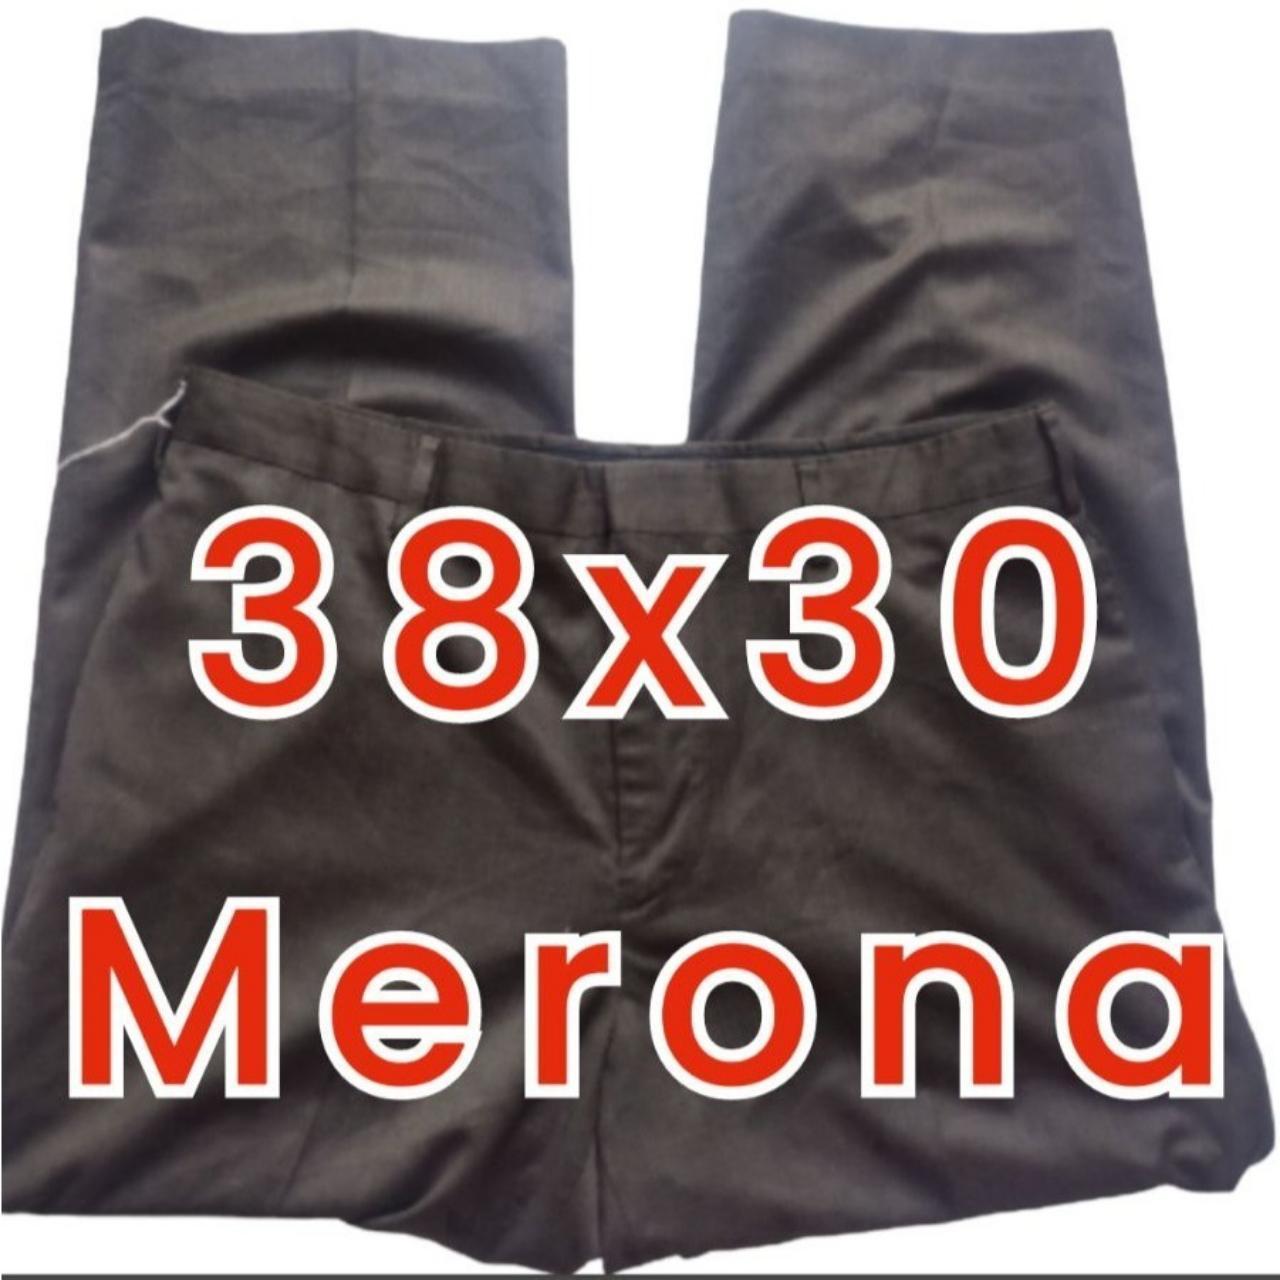 Brand - Merona Size - 38